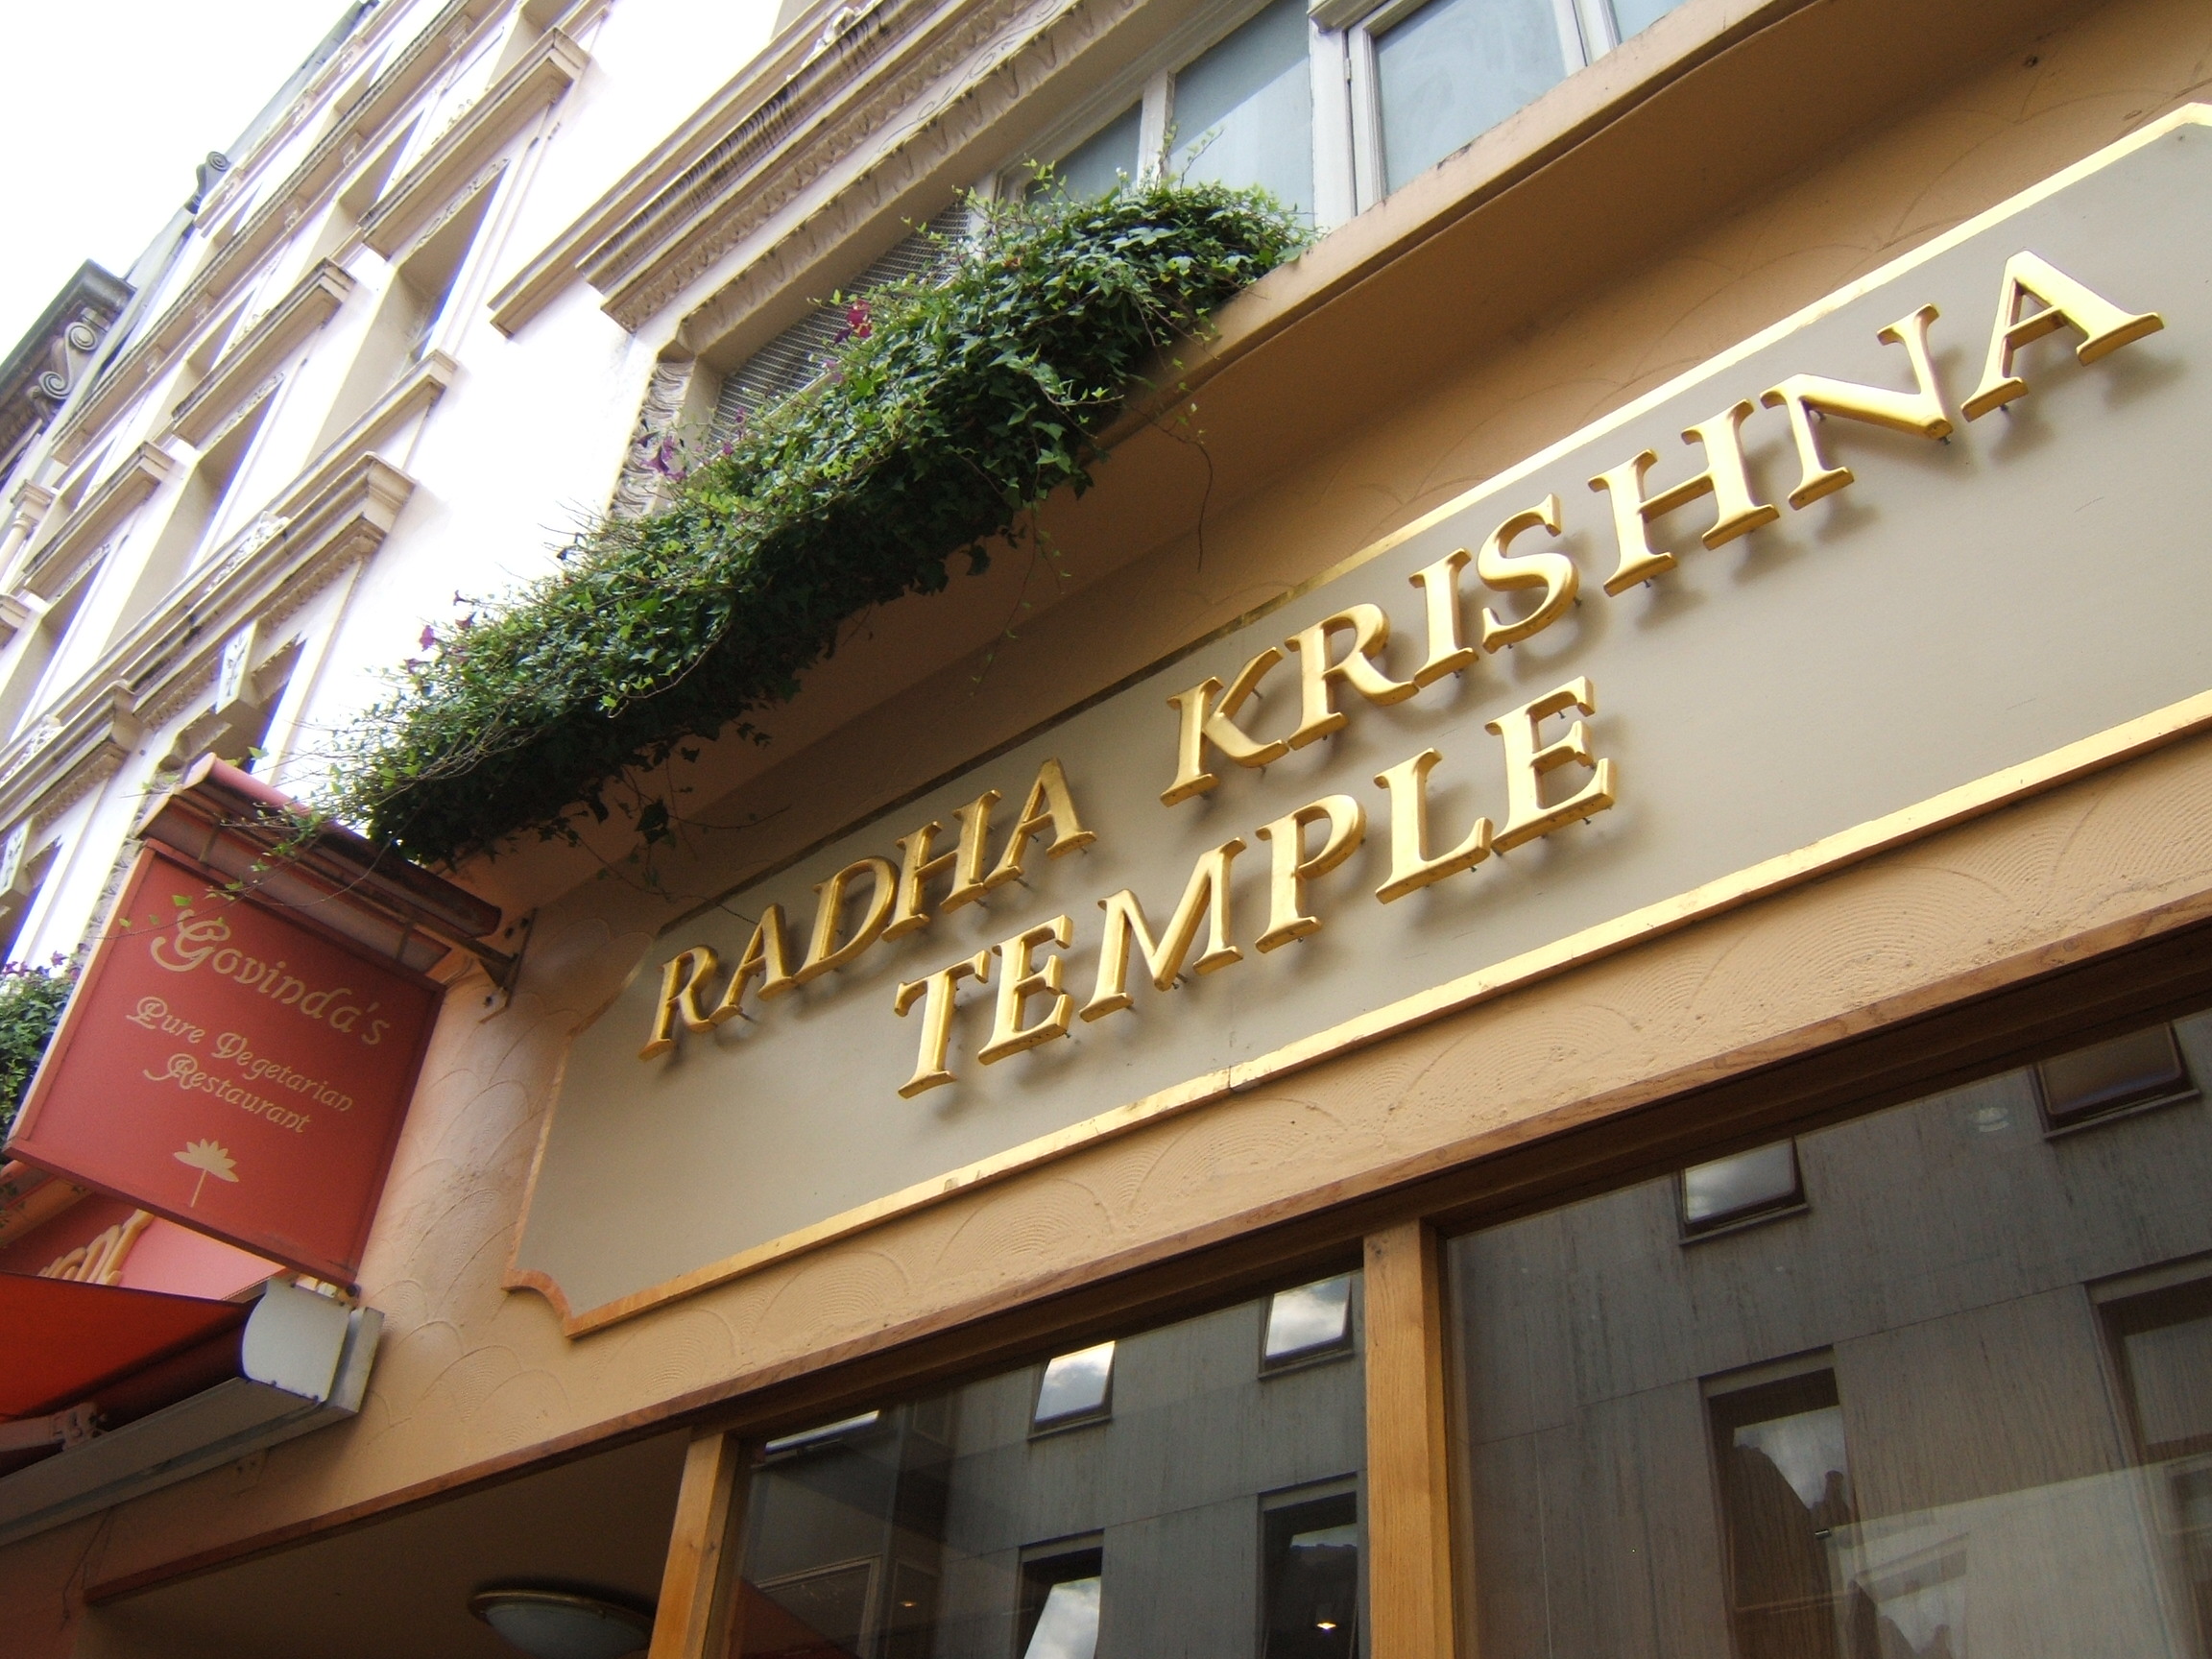 Radha Krishna Temple London